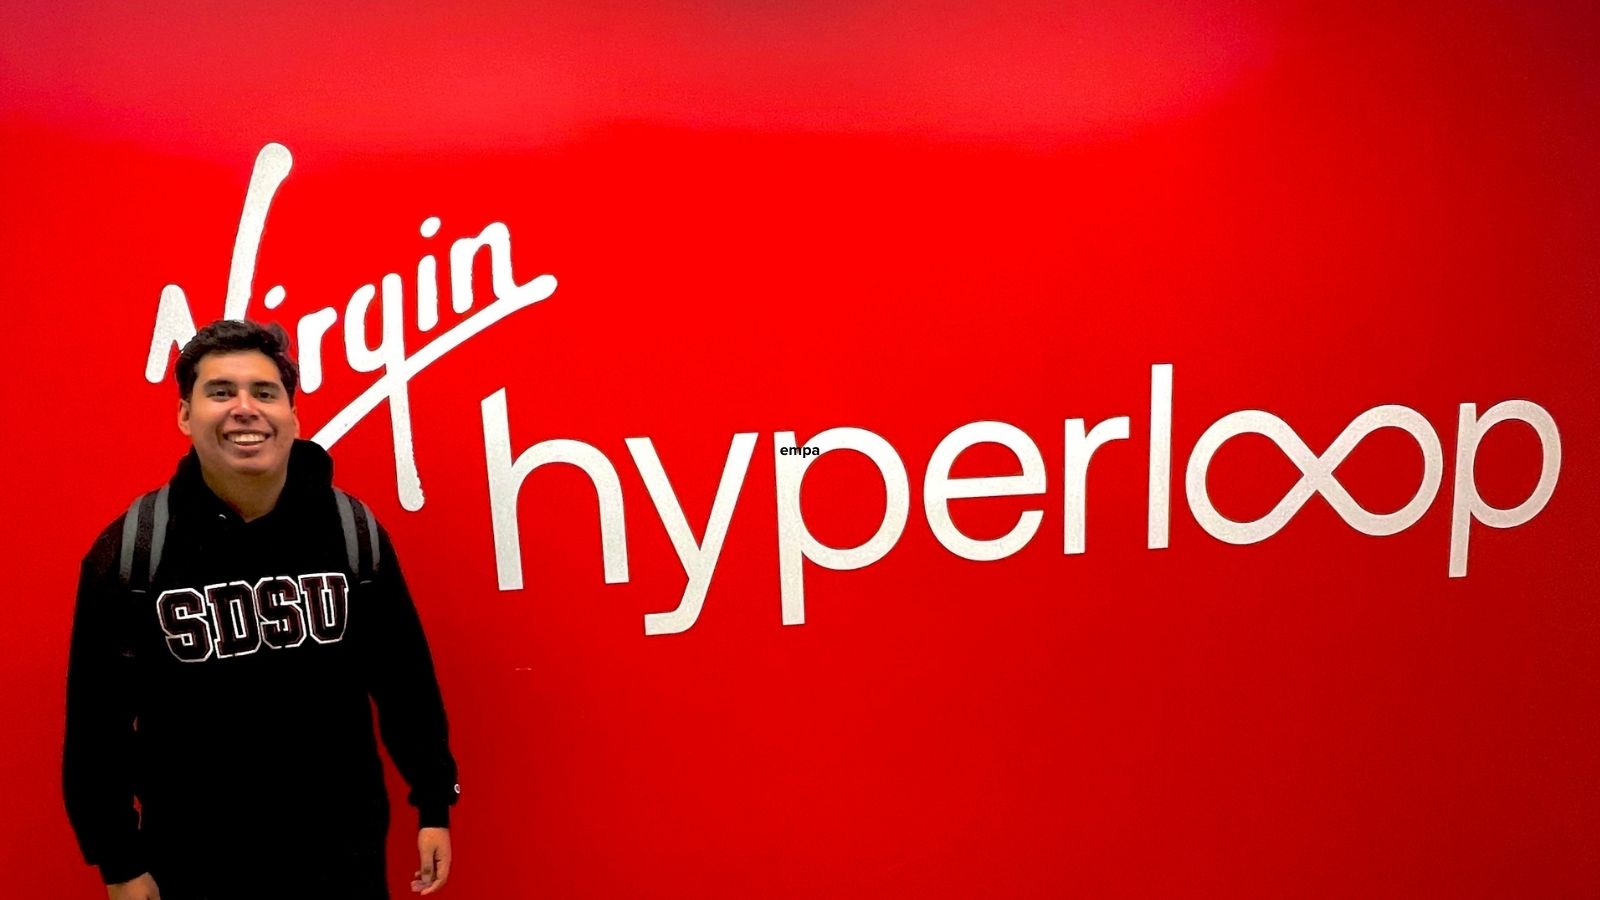 Carlos Guerrero Valdez is interning on the Virgin Hyperloop.